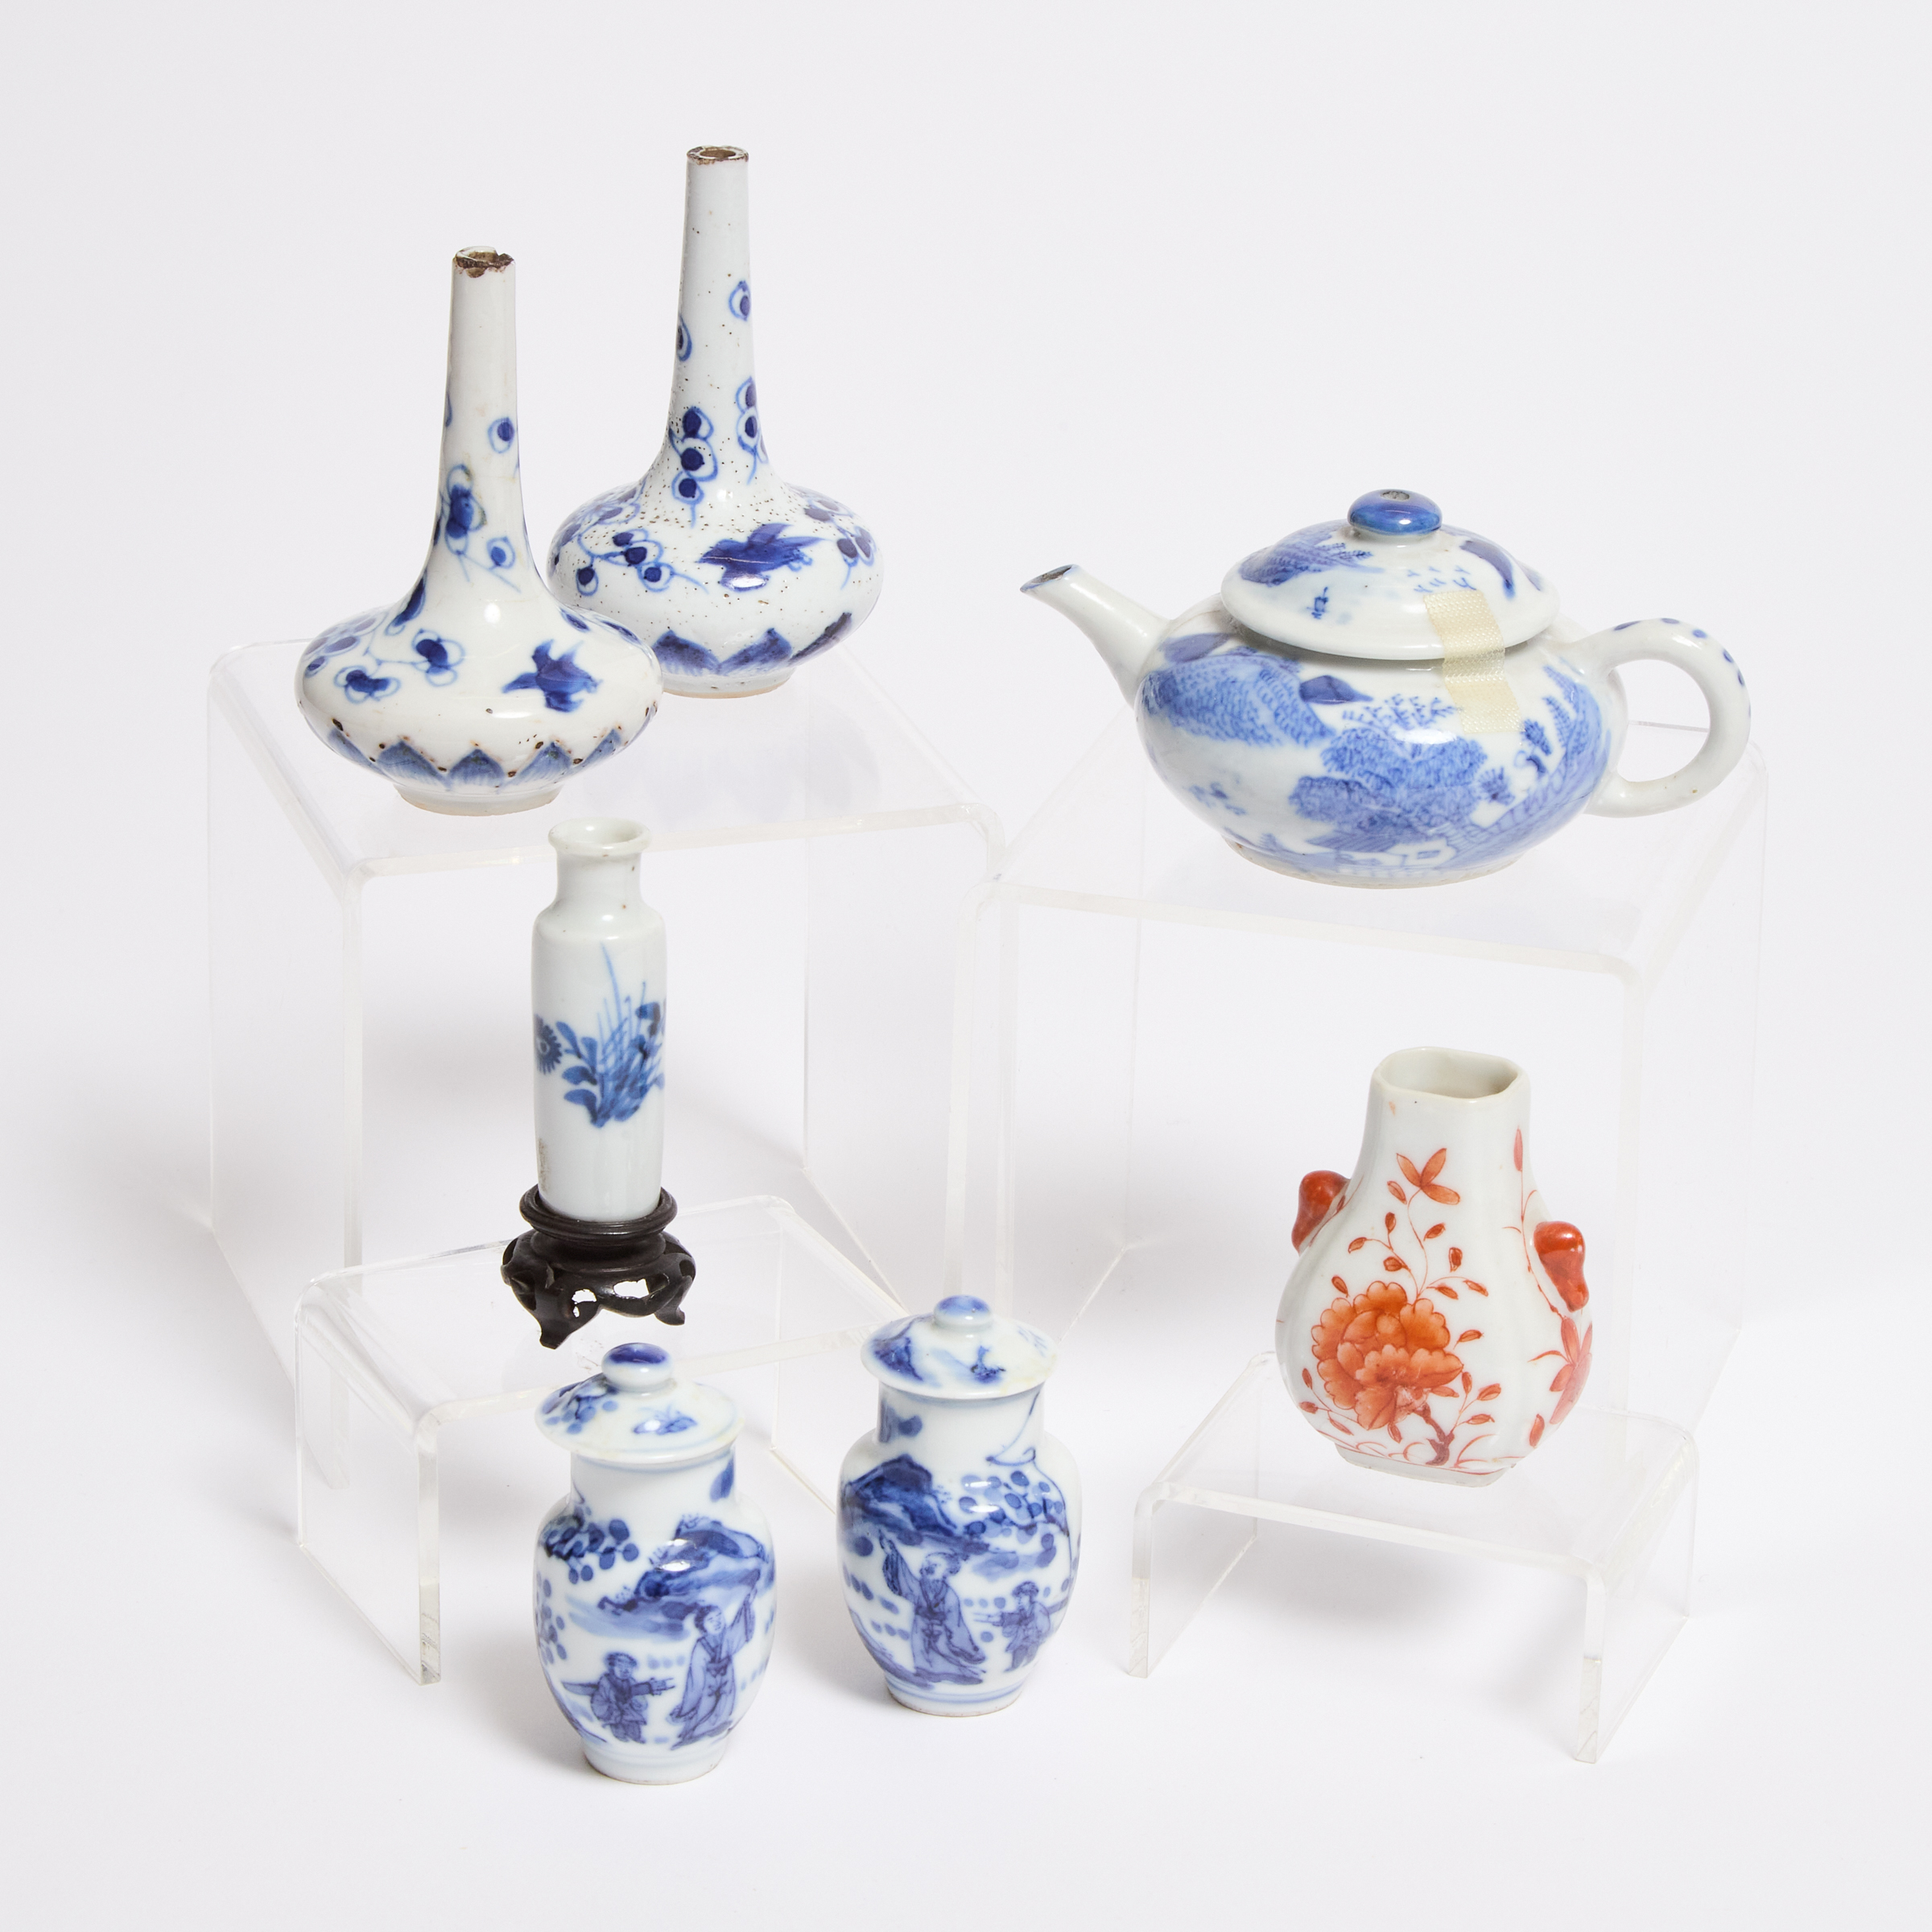 A Group of Seven Miniature Porcelain 2fb05e6